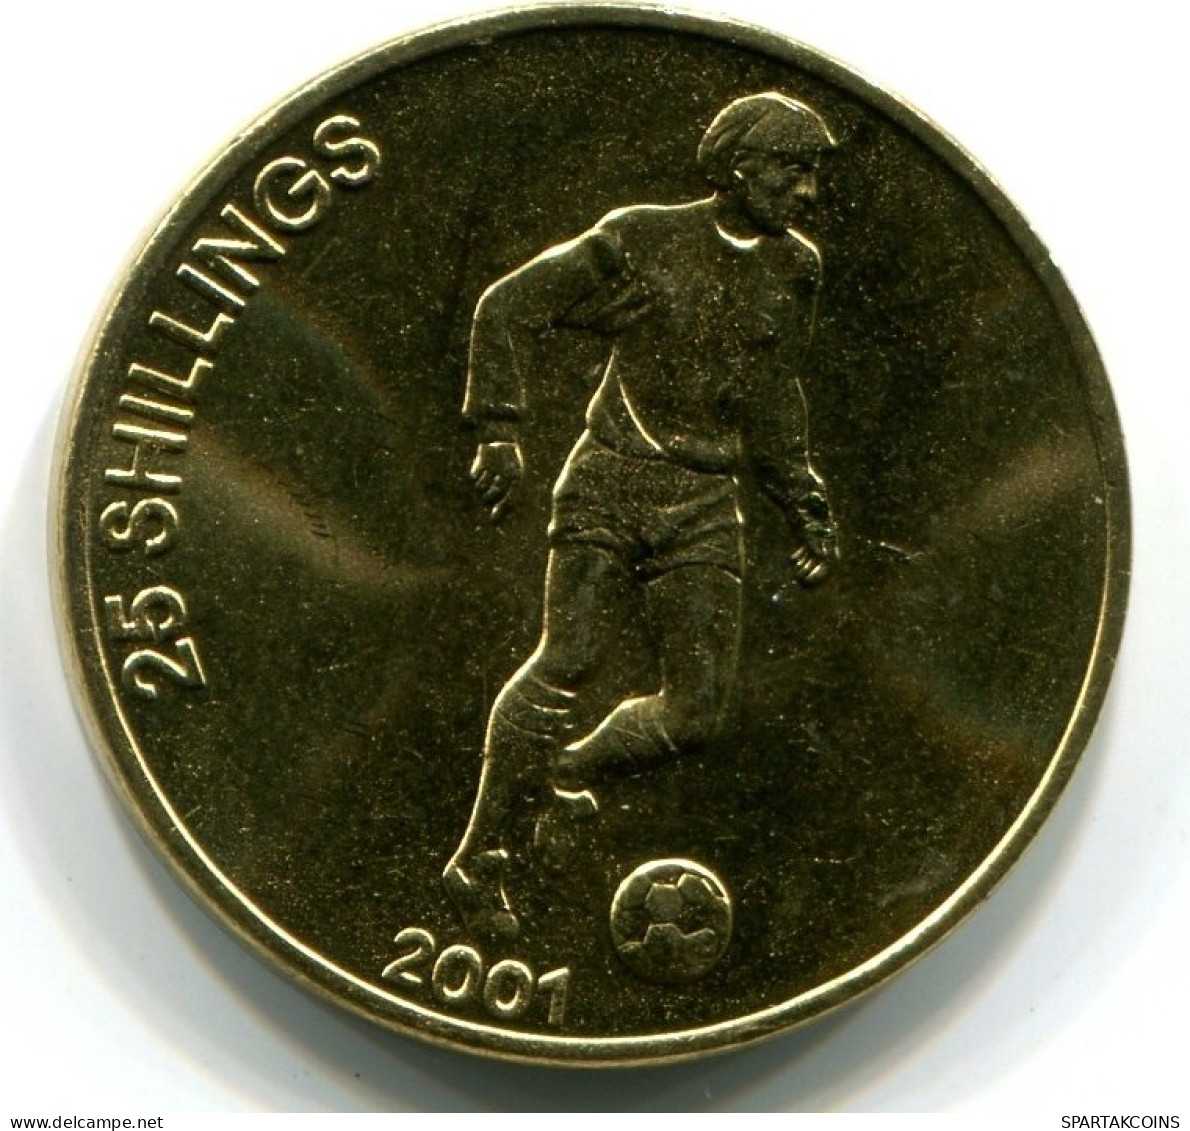 25 SHILLINGS 2001 SOMALIA UNC Soccer Player Coin #W11229.U.A - Somalia